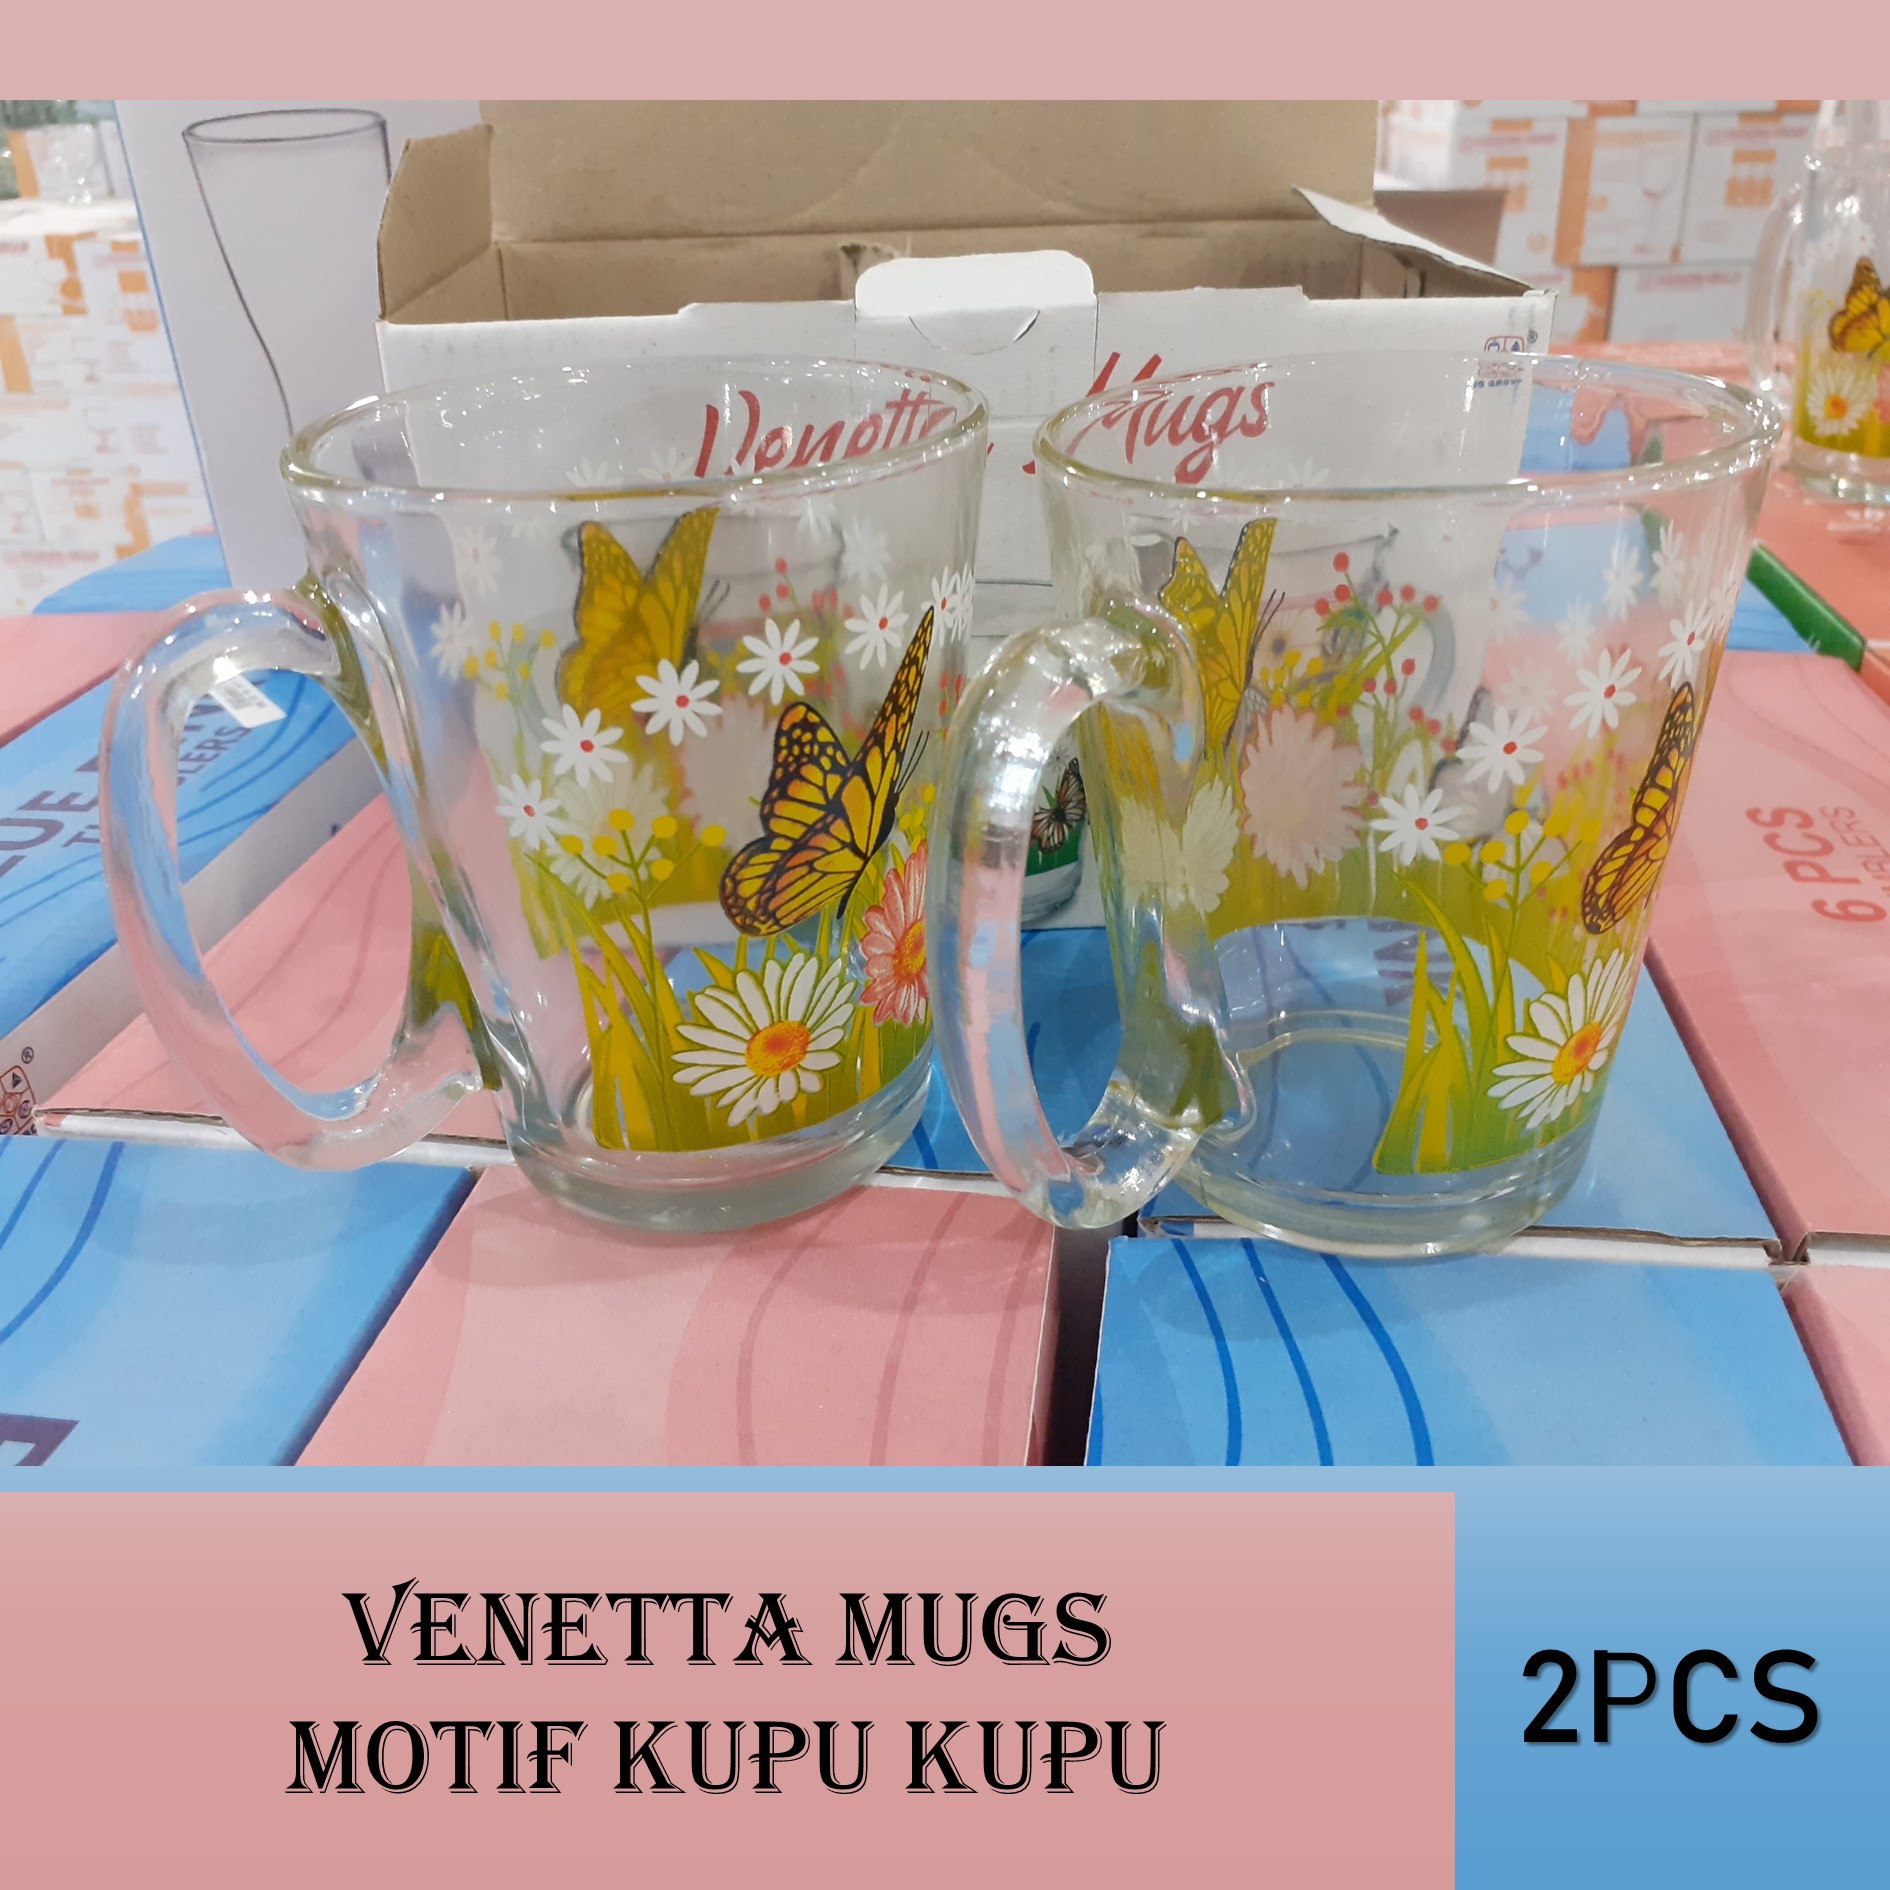 Venetta Mugs 300ml 2pcs Gelas Kaca Motif Kupu Gelas Kaca Kedang Drink Set Gelas Set Cantik Gelas Kaca Lusinan Murah Gelas Kaca 1 Lusin Gelas Unik Cafe Gelas Gagang Beling Lazada Indonesia